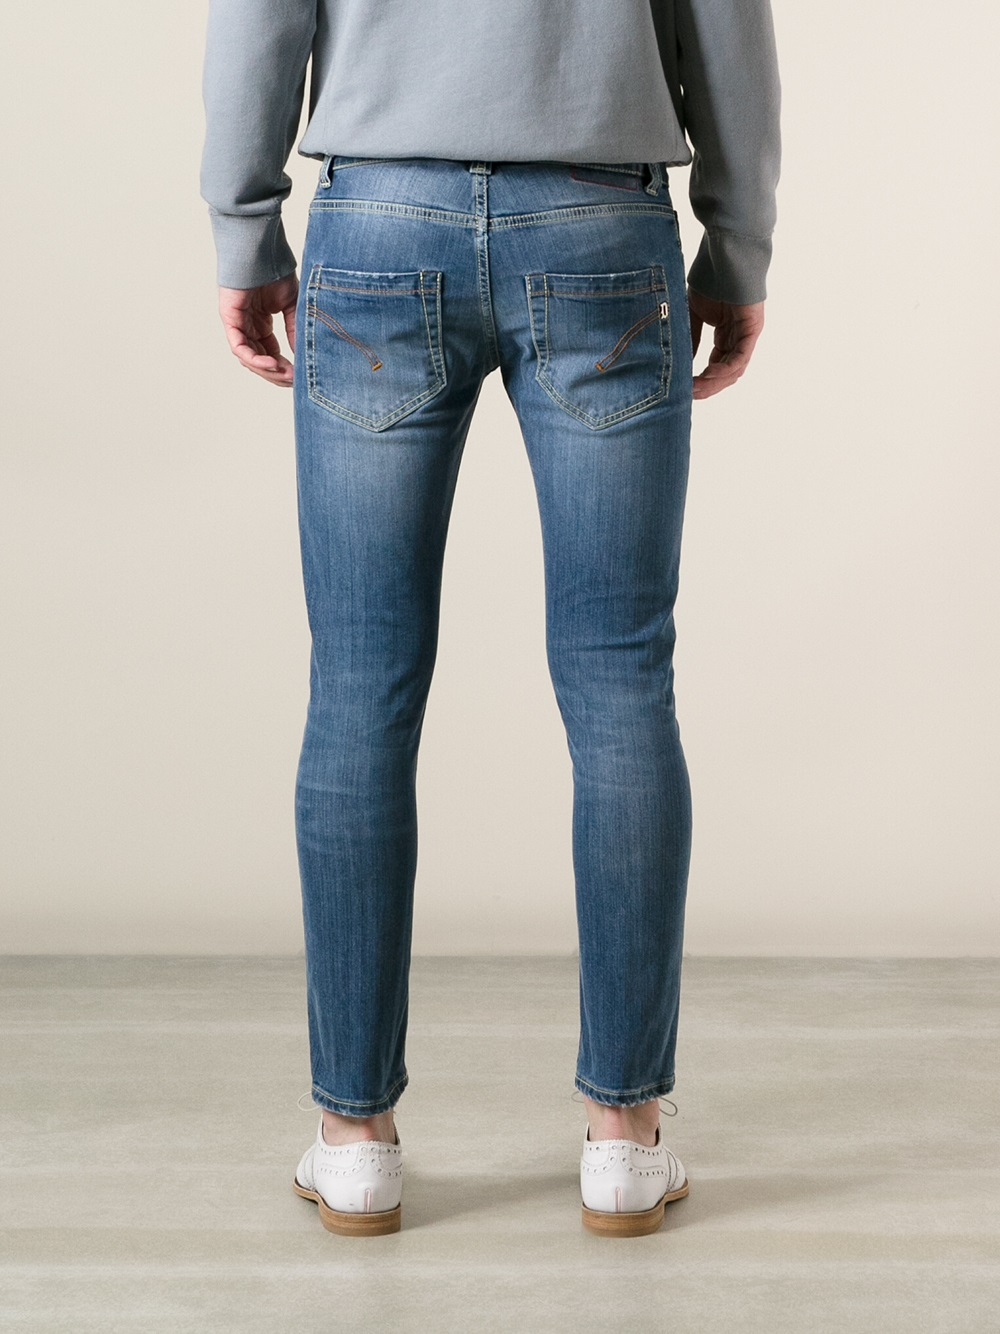 Lyst - Dondup Mius Skinny Jeans in Blue for Men